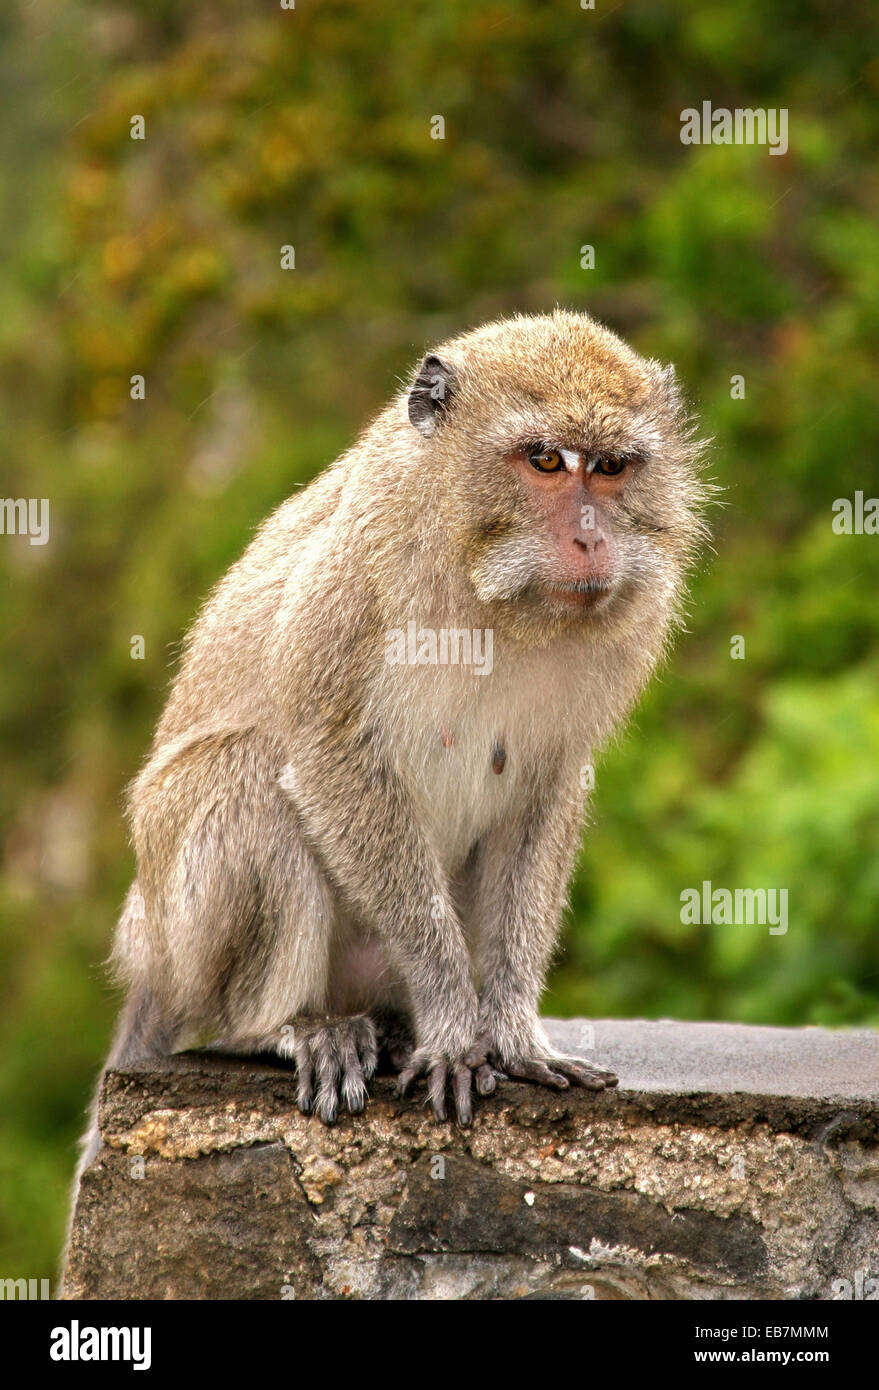 Monos macacos de cola larga Foto de stock